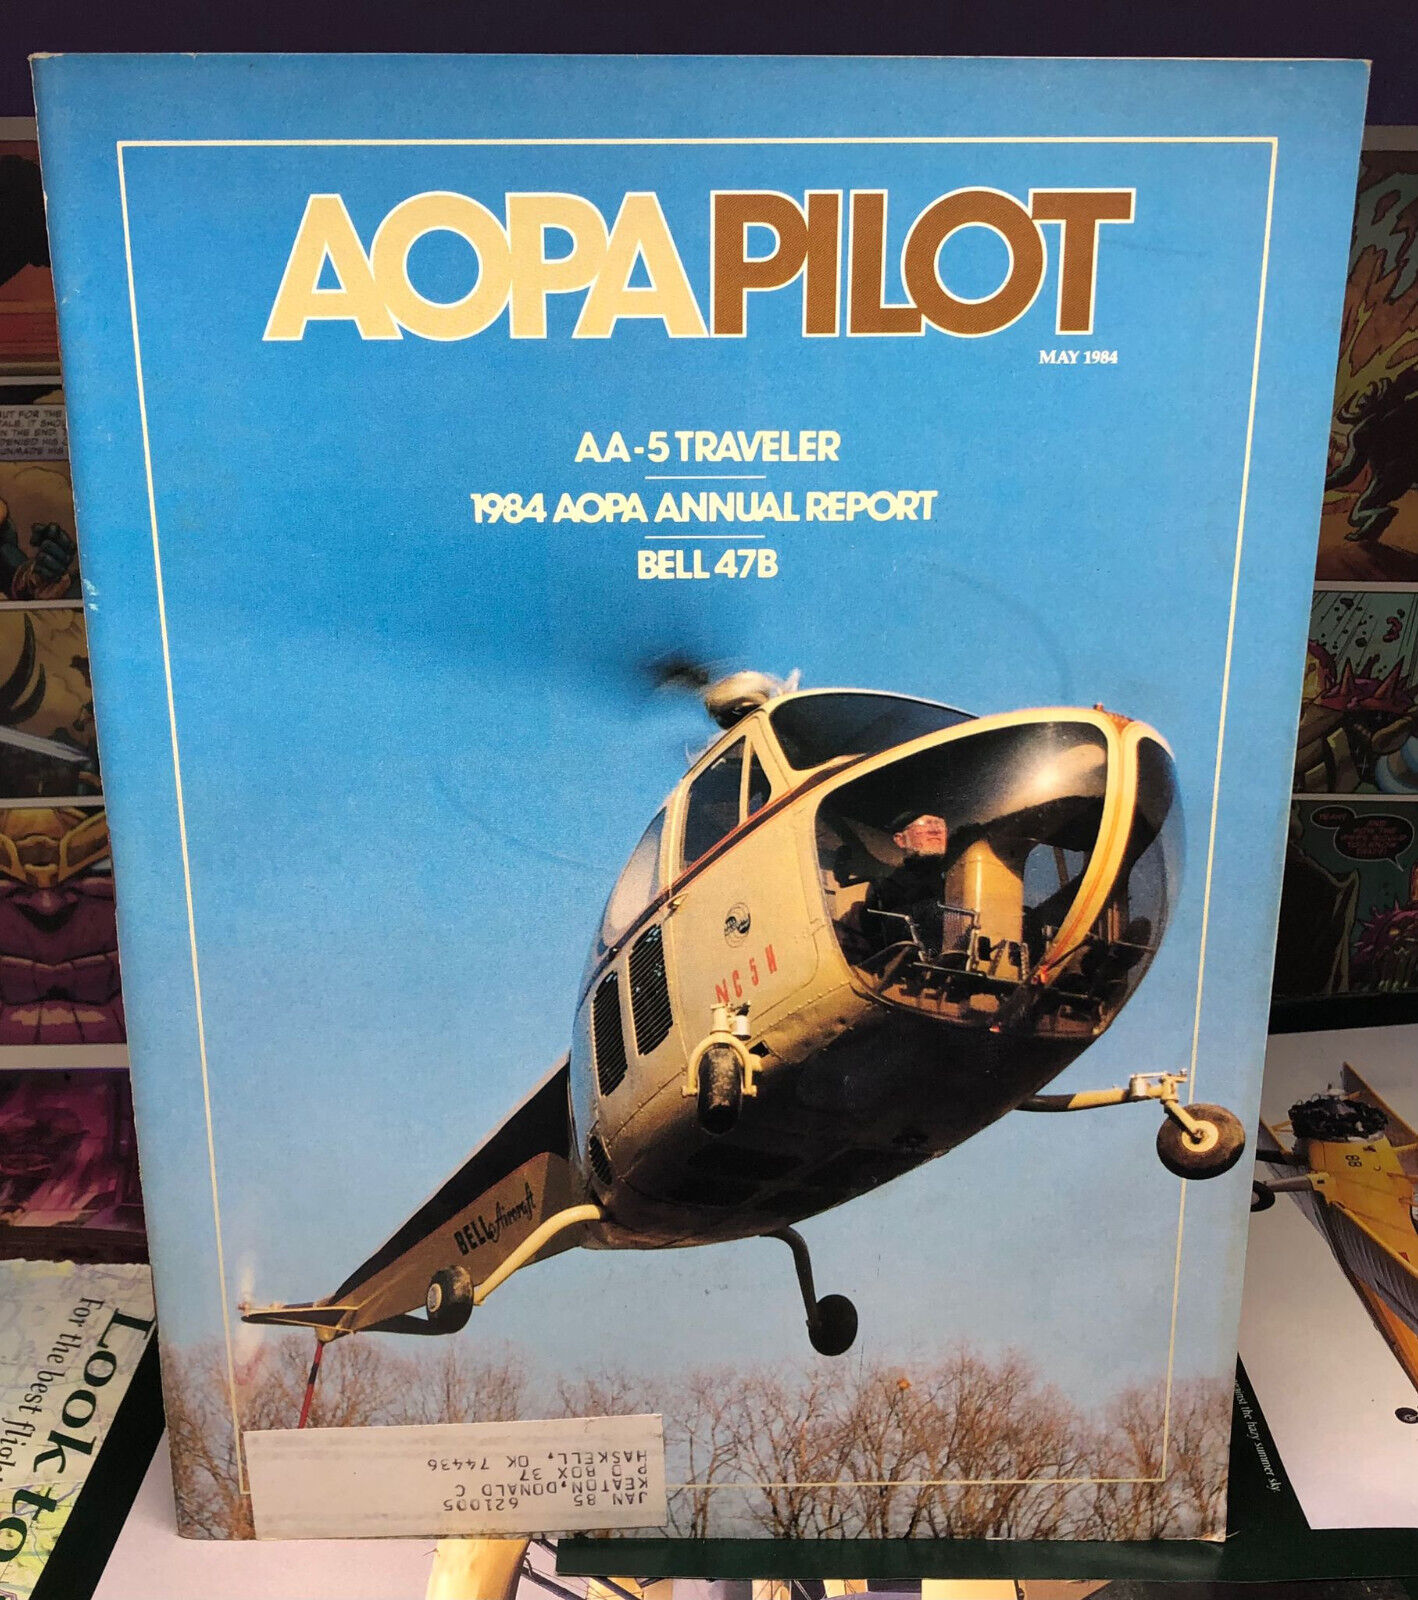 Aopa Pilot Magazine - May 1984,  AA-5 Traveler, BELL 47B